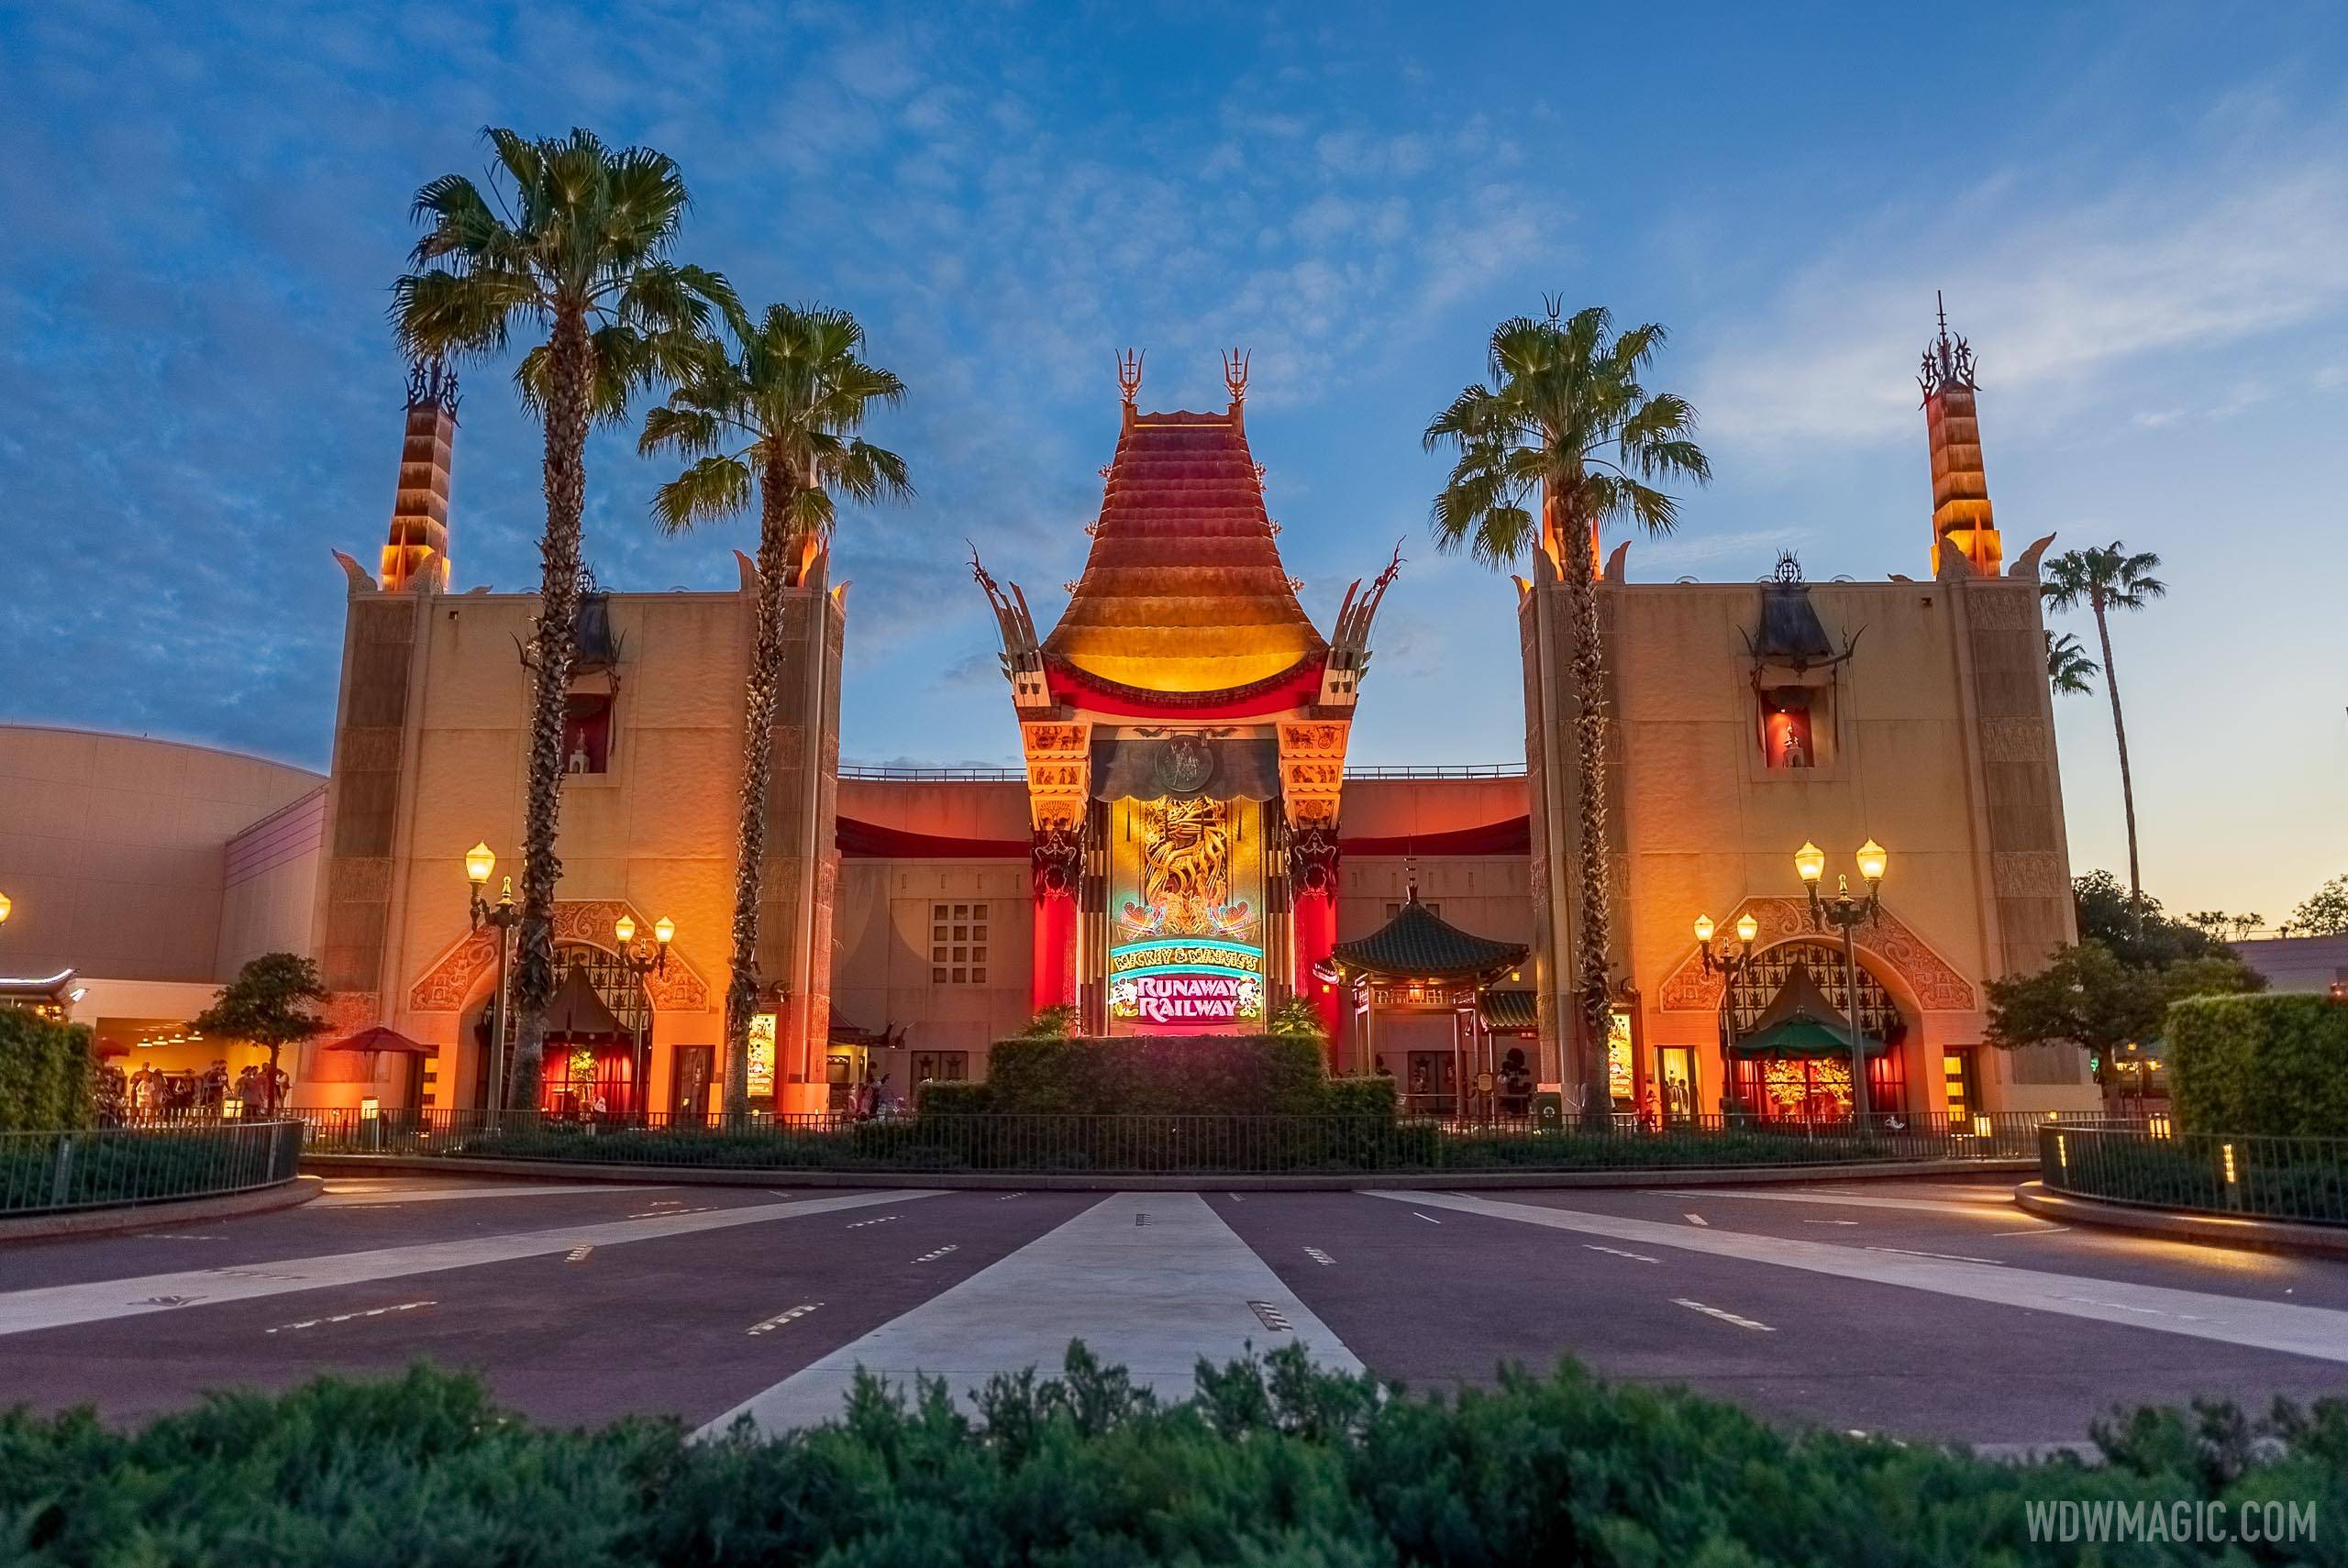 Disney's Hollywood Studios Annual Passholder sweepstakes